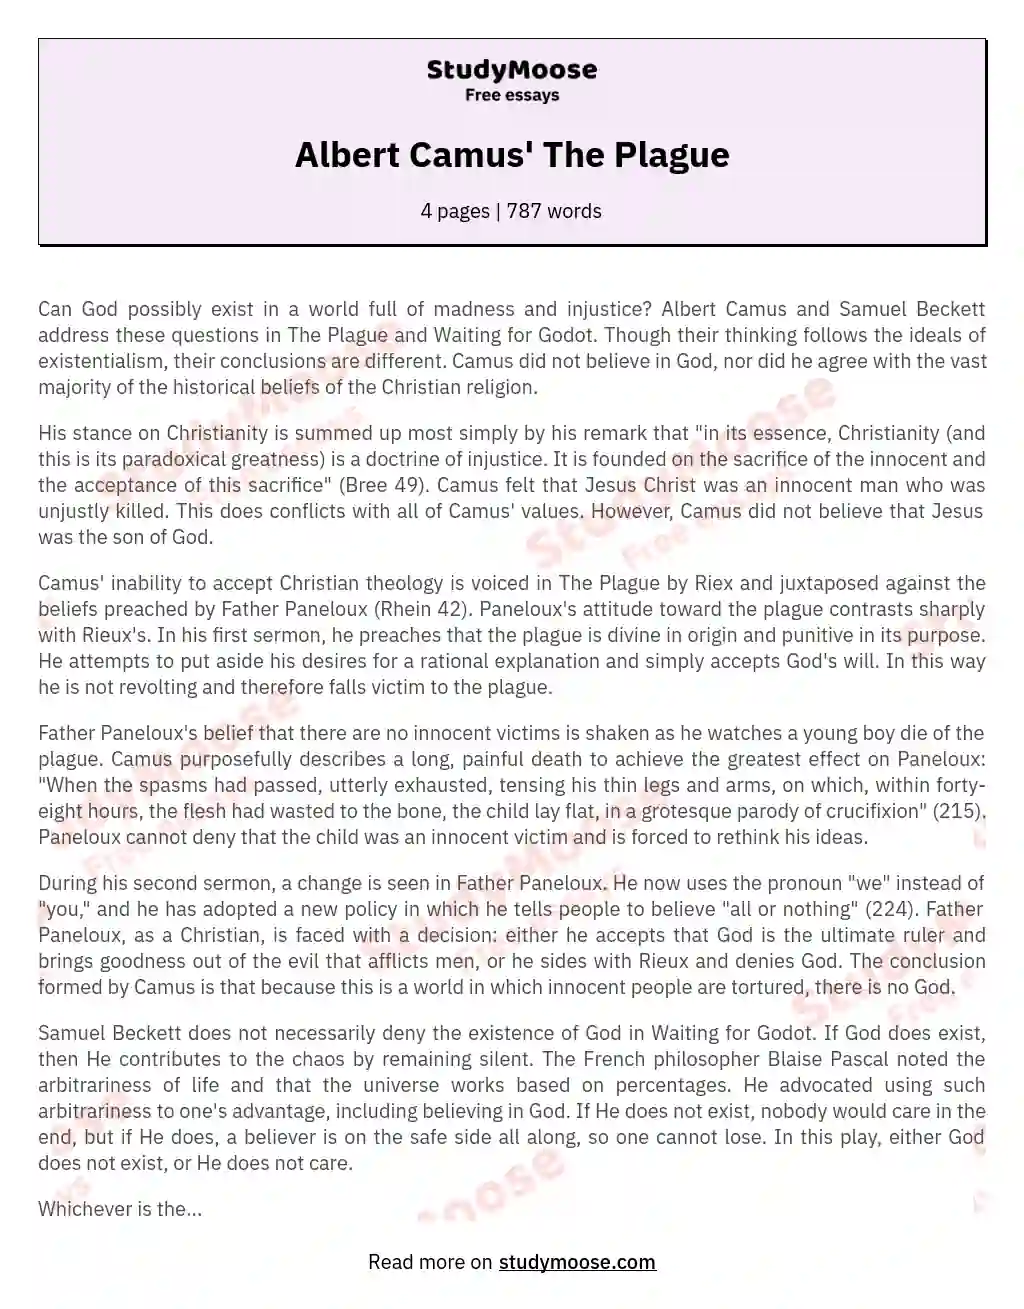 Albert Camus' The Plague essay